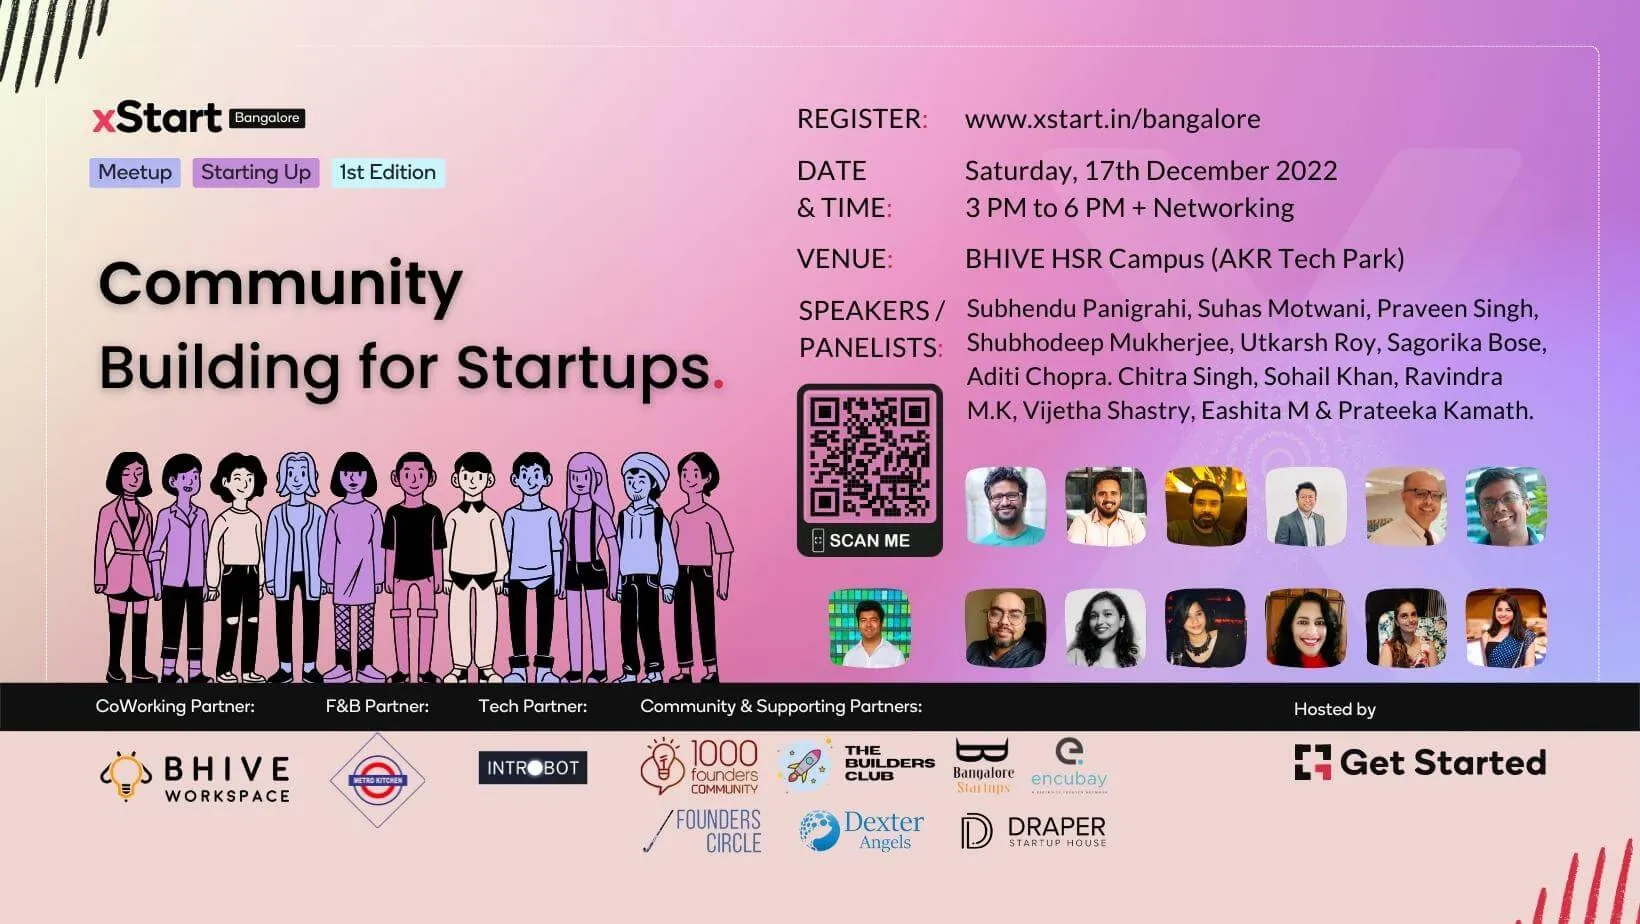 xStart Bangalore Community Building for Startups Event